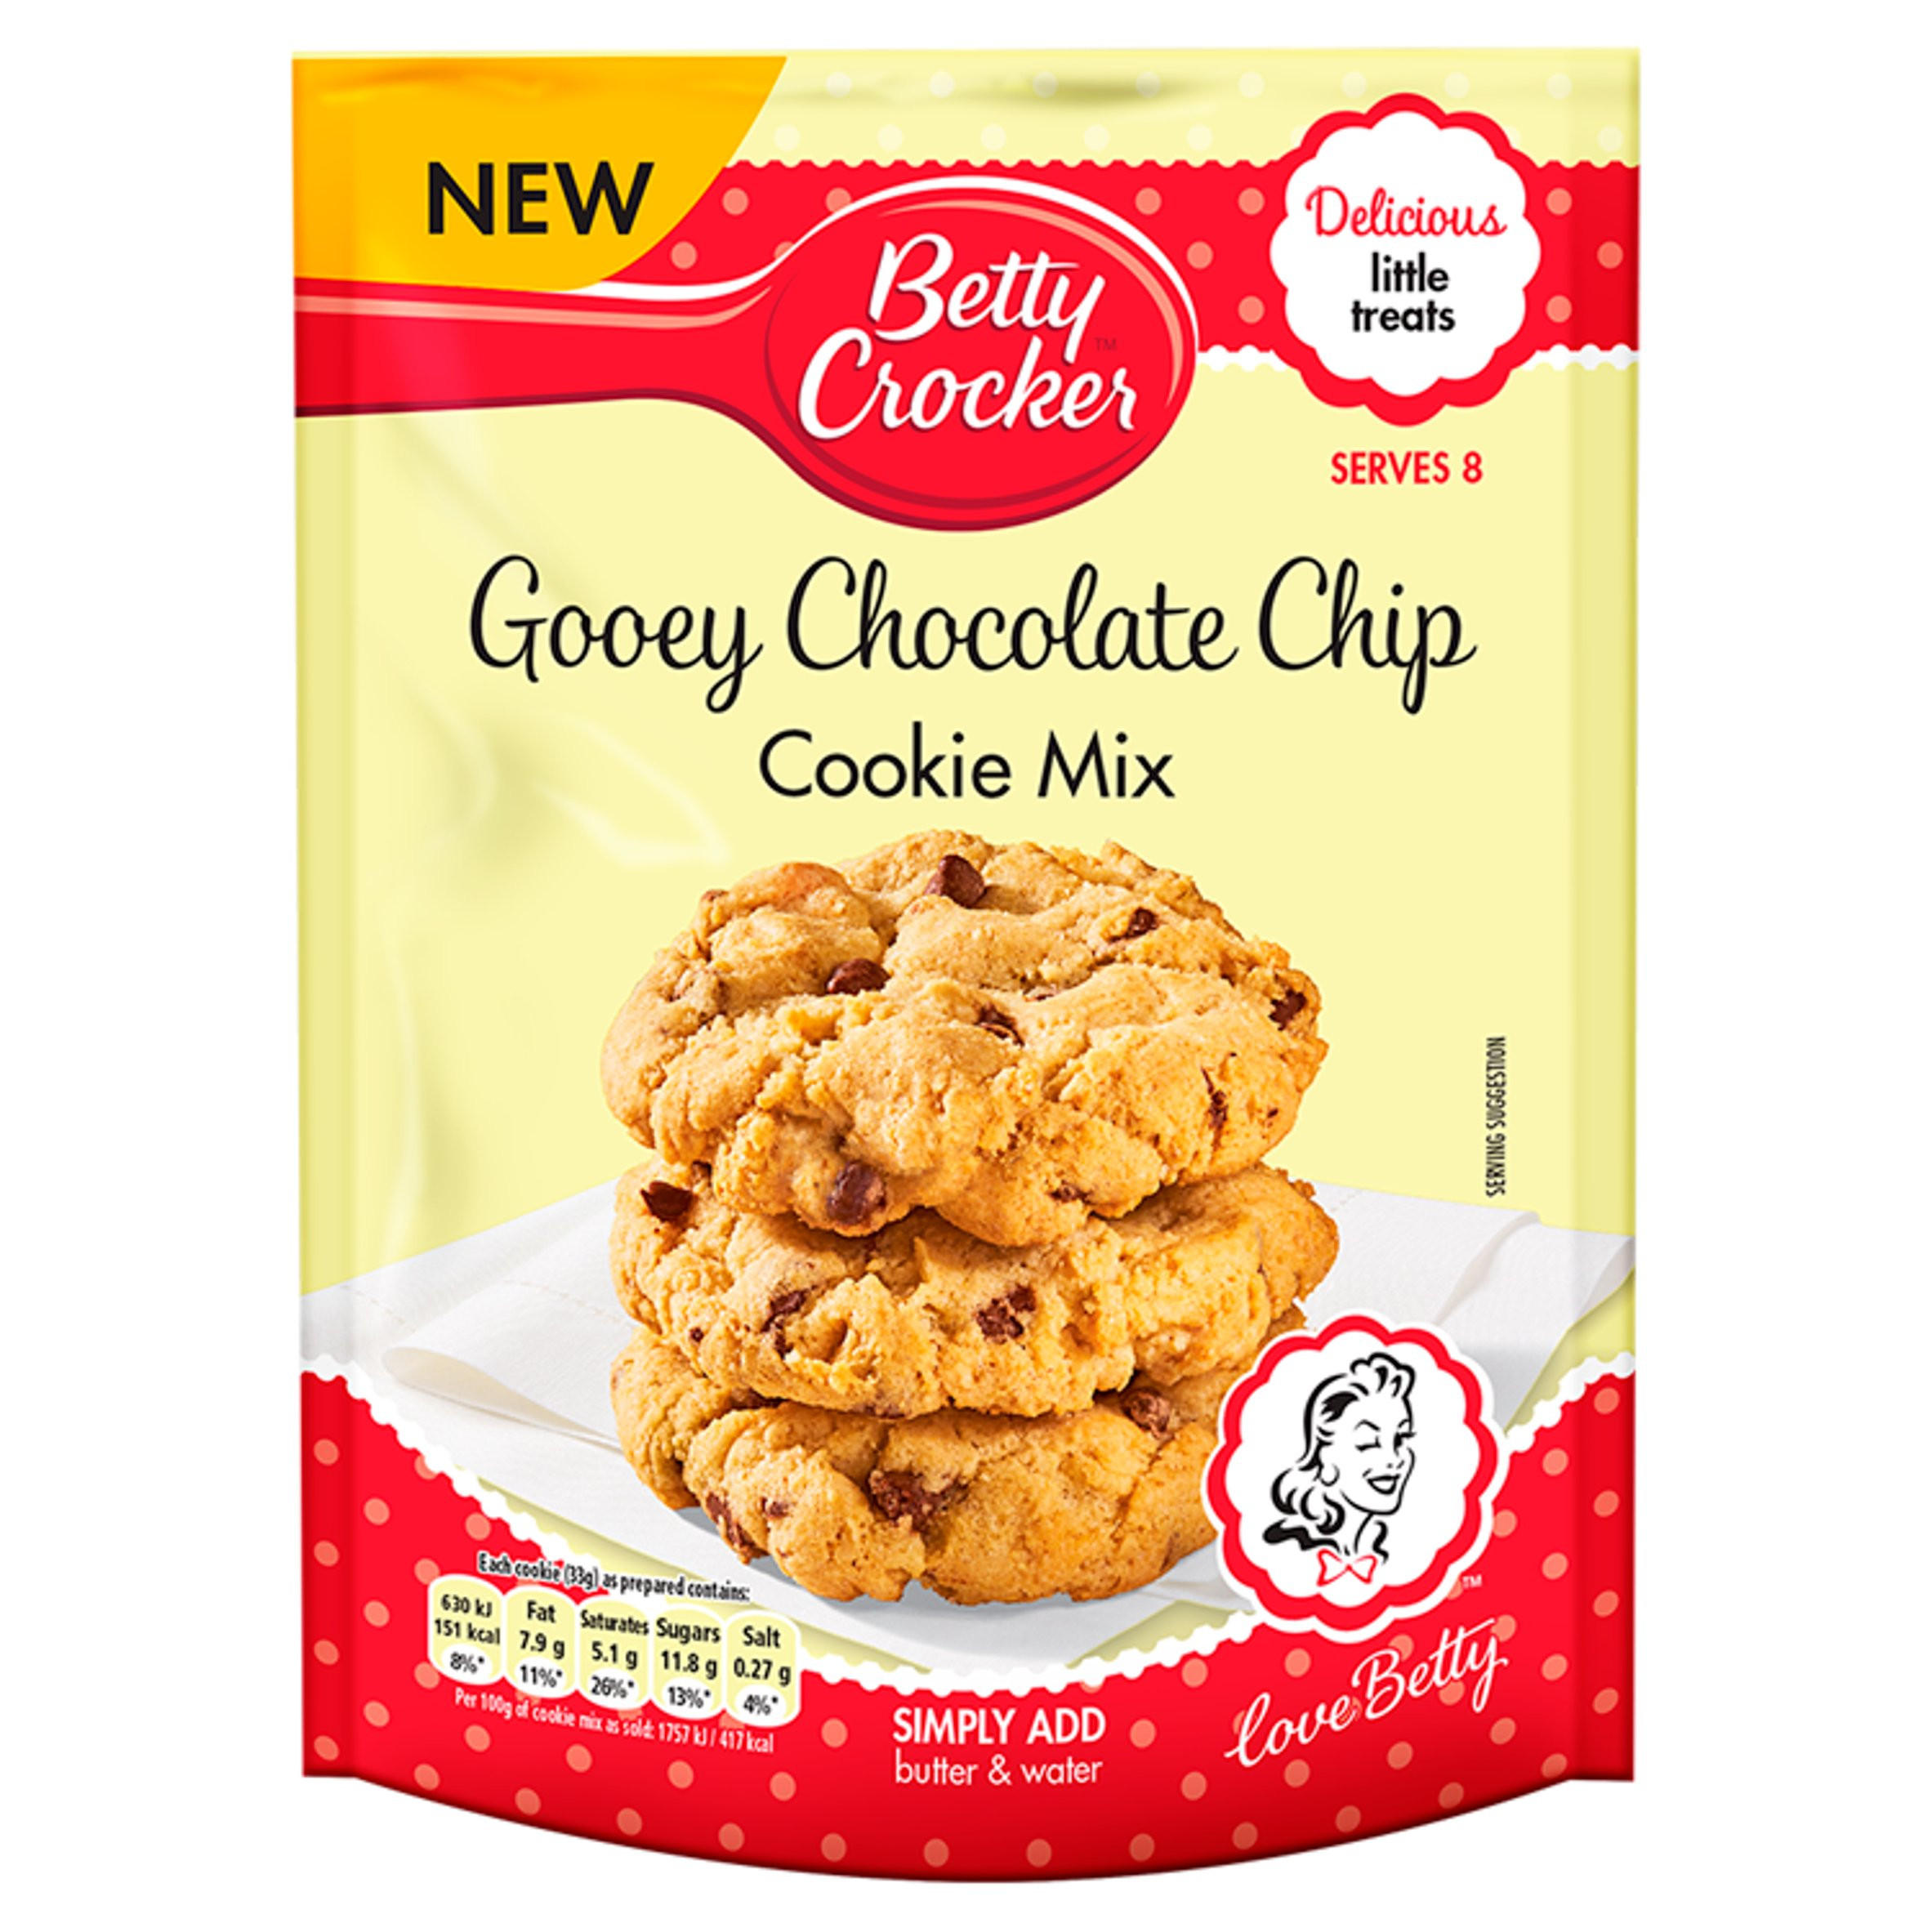 betty-crocker-gooey-chocolate-chip-cookie-mix-200g-home-baking